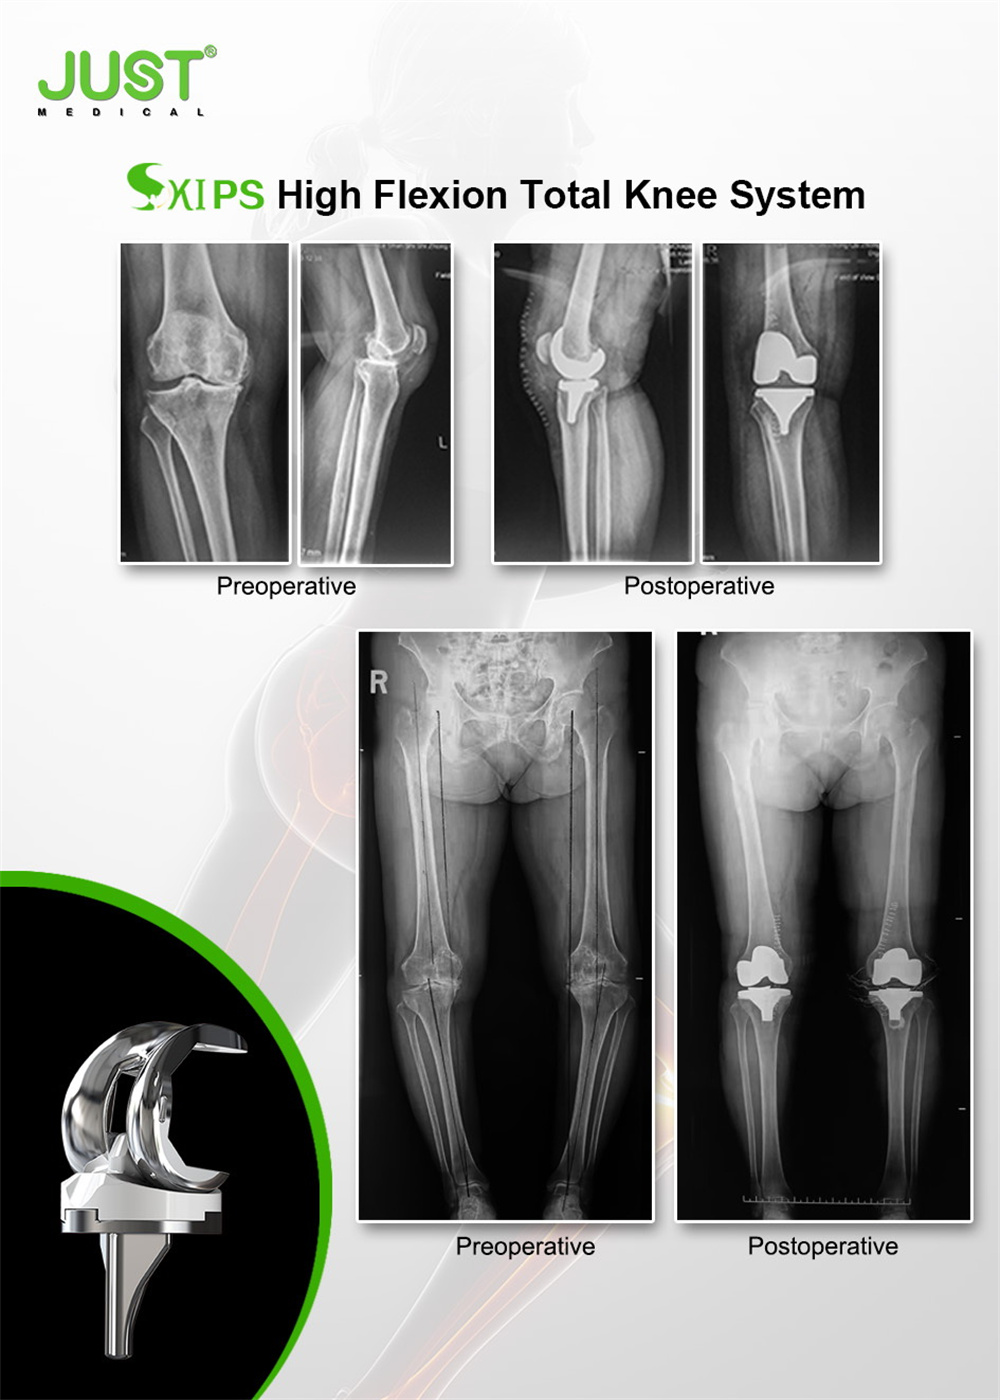 SKI®PS High Flexion Total Knee System